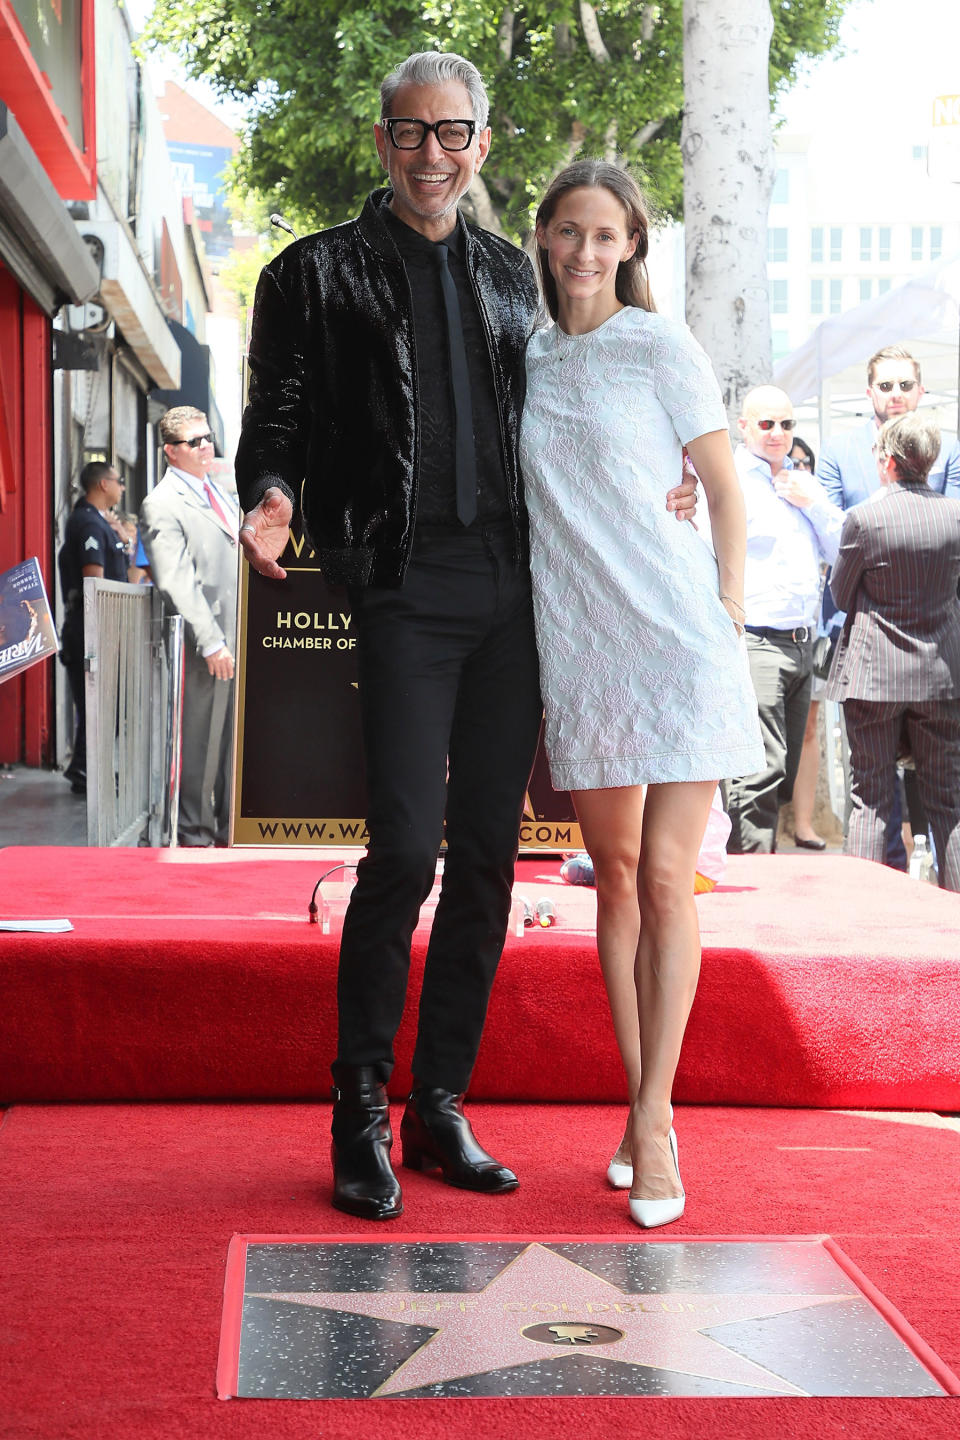 Jeff Goldblum and his wife